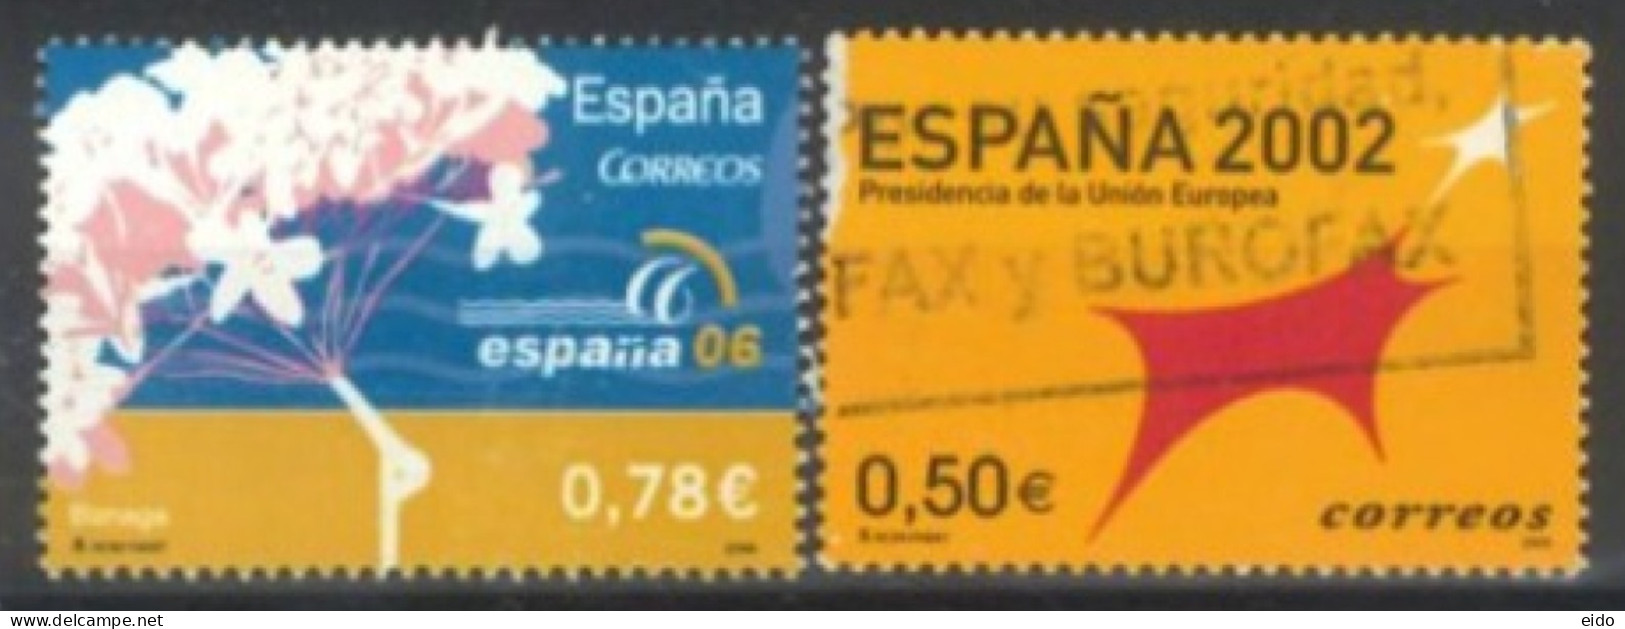 SPAIN, 2002/2006, ESPANA 2006 & 2002 STAMPS SET OF 2, USED. - Usados